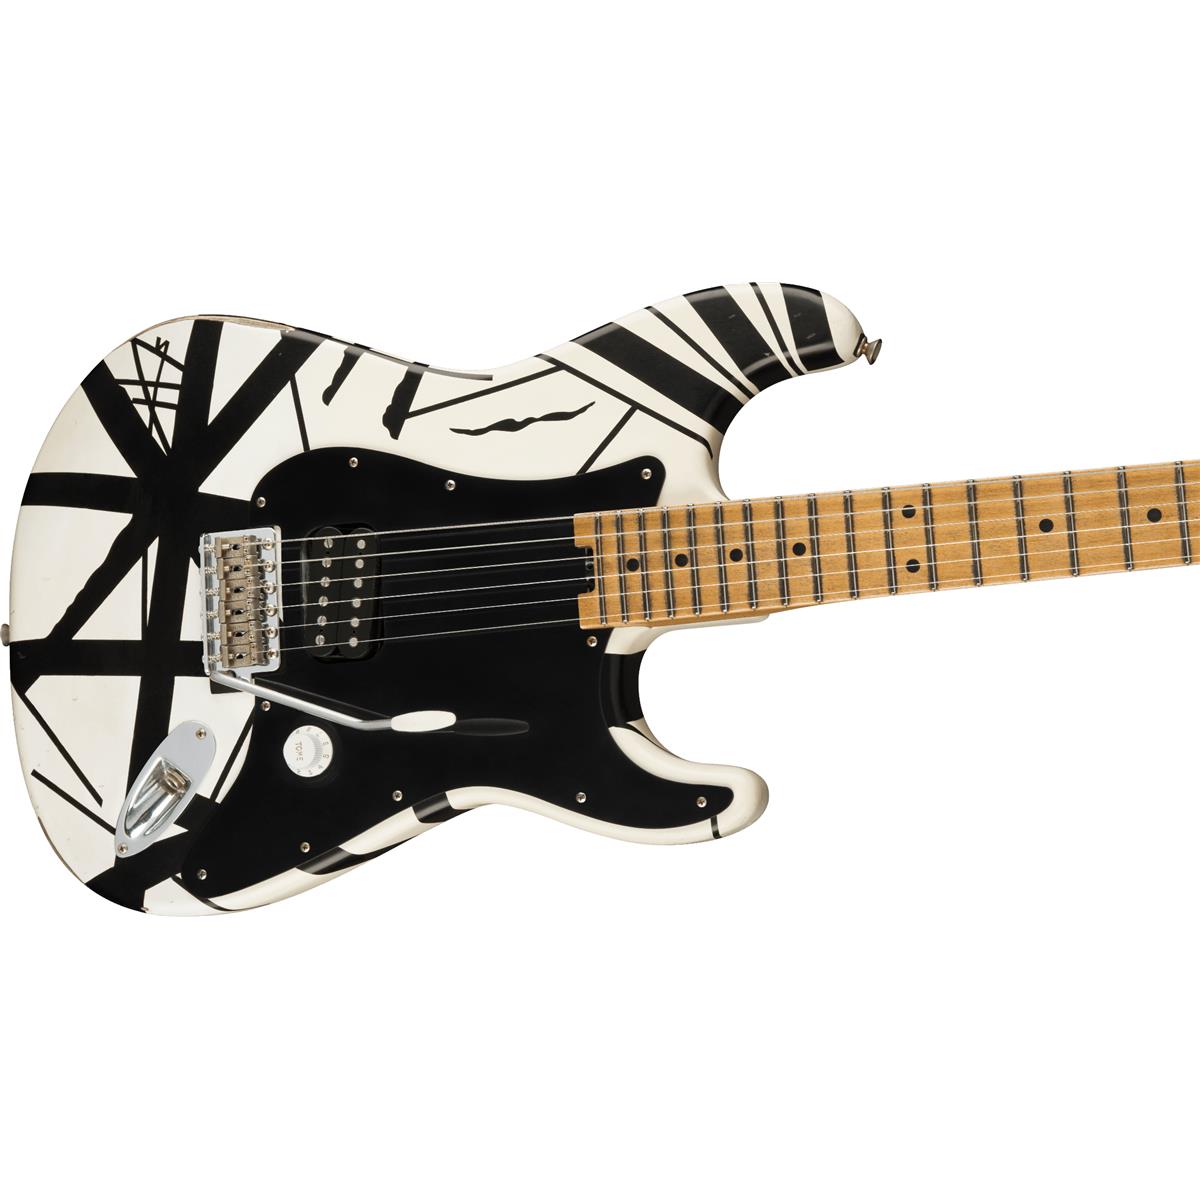 EVH Striped Series '78 Eruption Electric Guitar $899 + free s/h